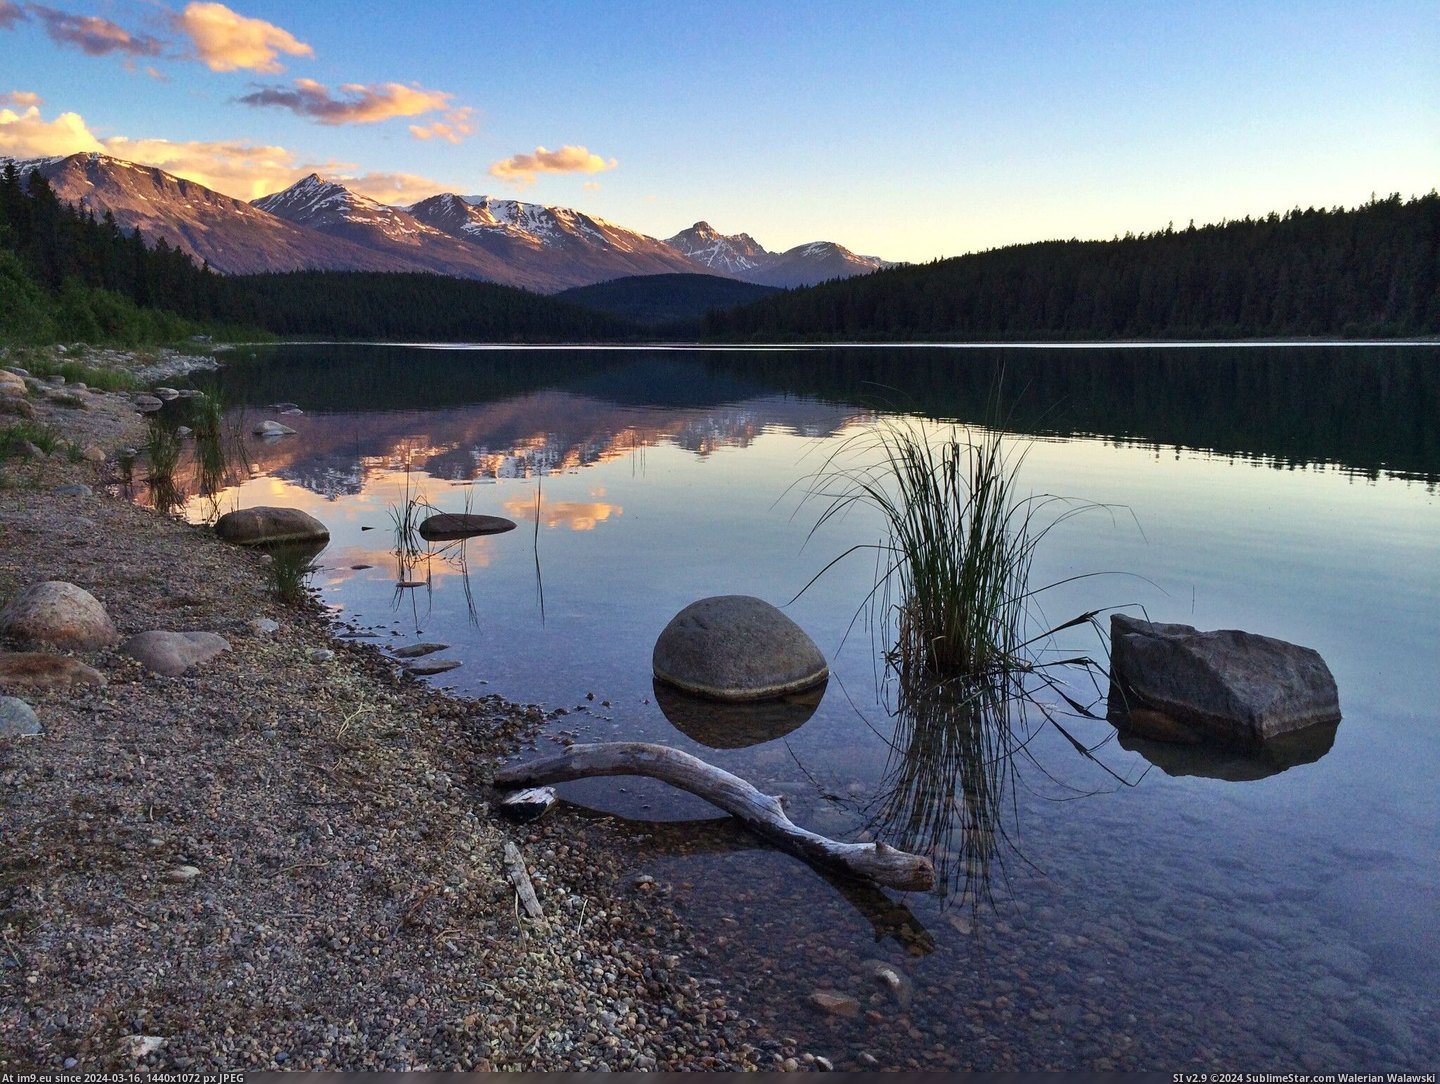 #Lake #Sunset #2048x1536 #Jasper #Patricia #Canada #Alberta [Earthporn] Sunset at Patricia Lake near Jasper, ALberta, Canada. [2048x1536] Pic. (Изображение из альбом My r/EARTHPORN favs))